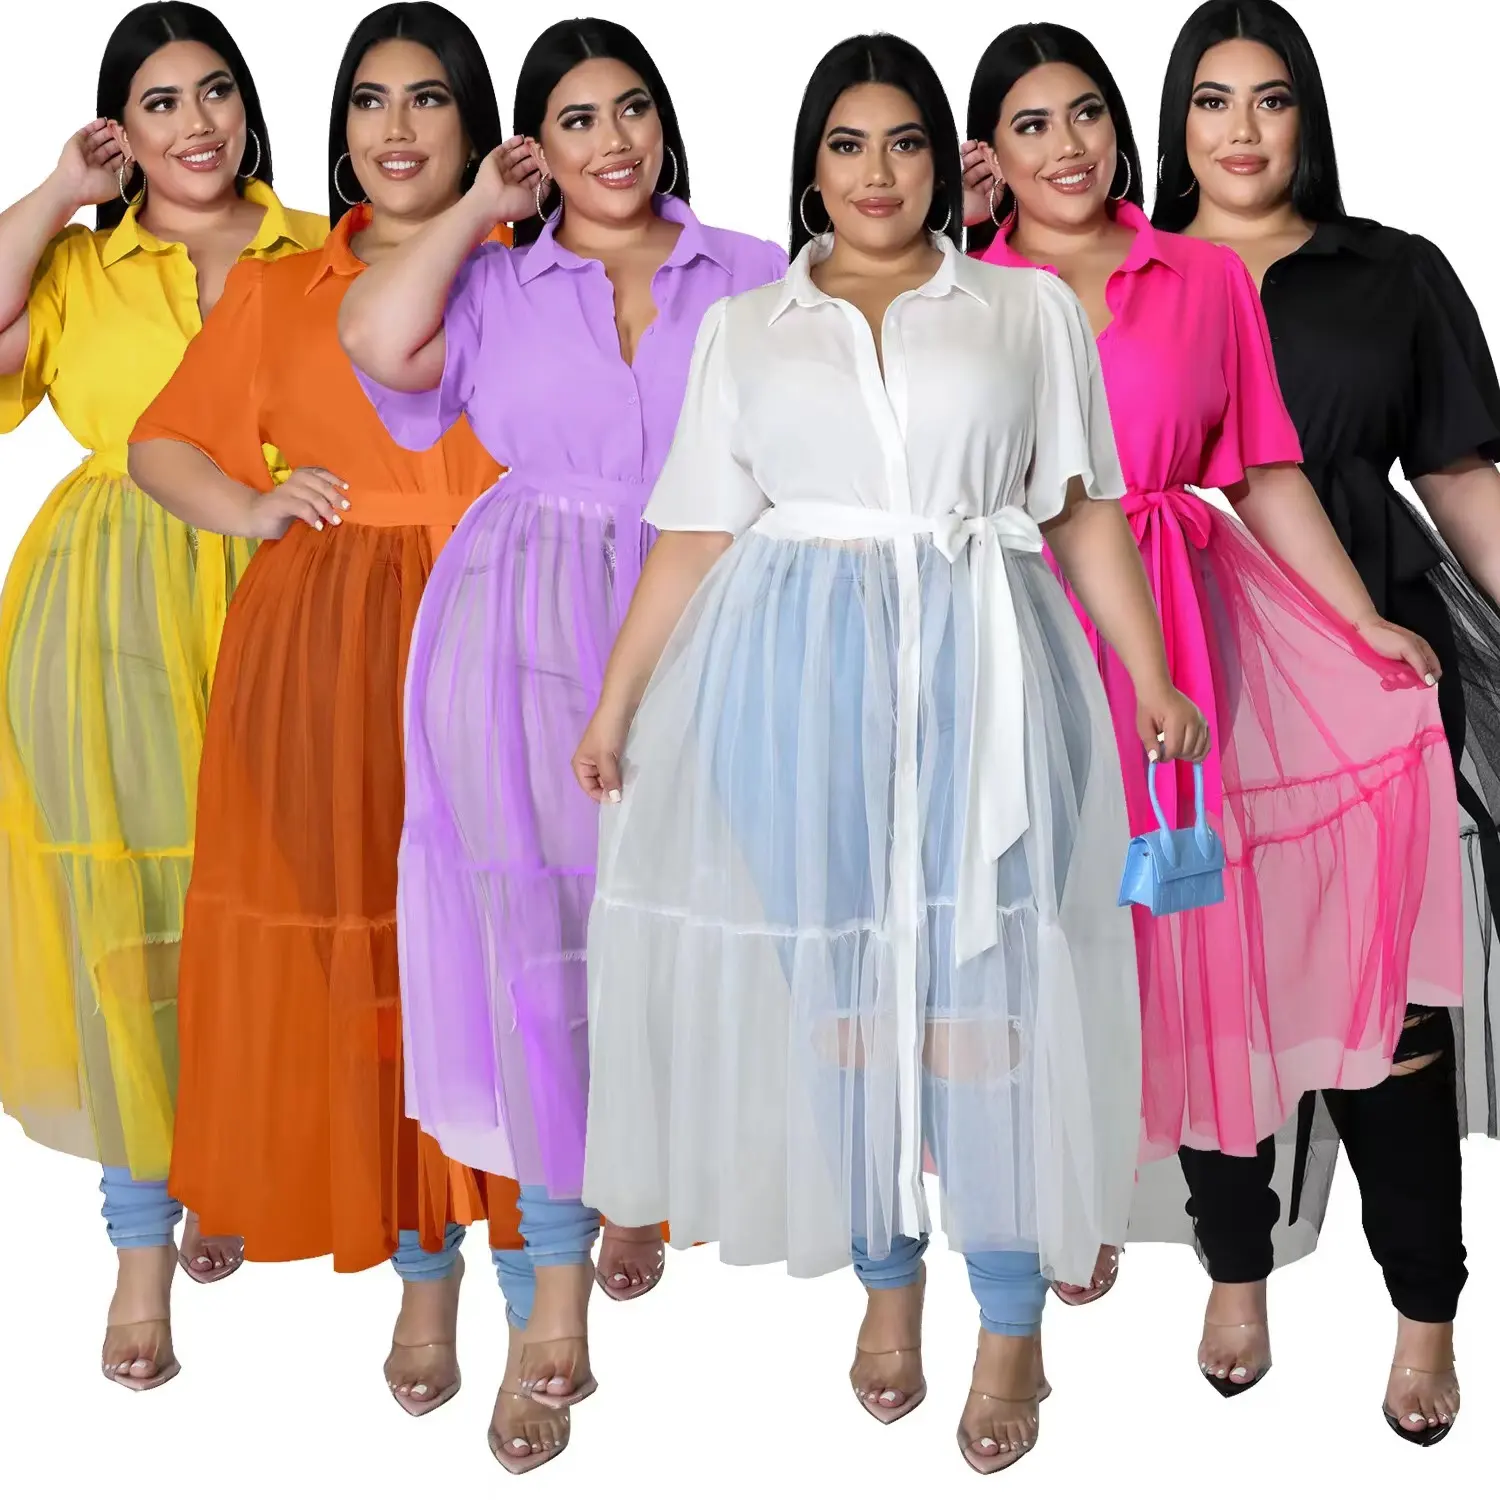 Summer Wholesale Chiffon Short Sleeve Shirts Womens Dresses New Fashion Plus Size Casual Dresses